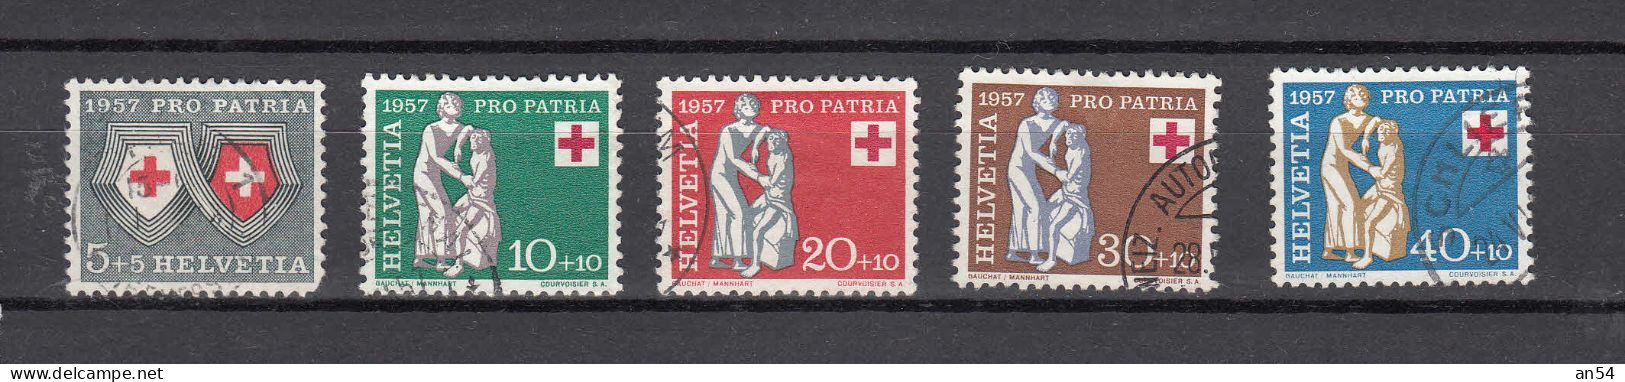 PP   1957  N° B81 à B85  OBLITERES   COTE 20.00         CATALOGUE SBK - Usados